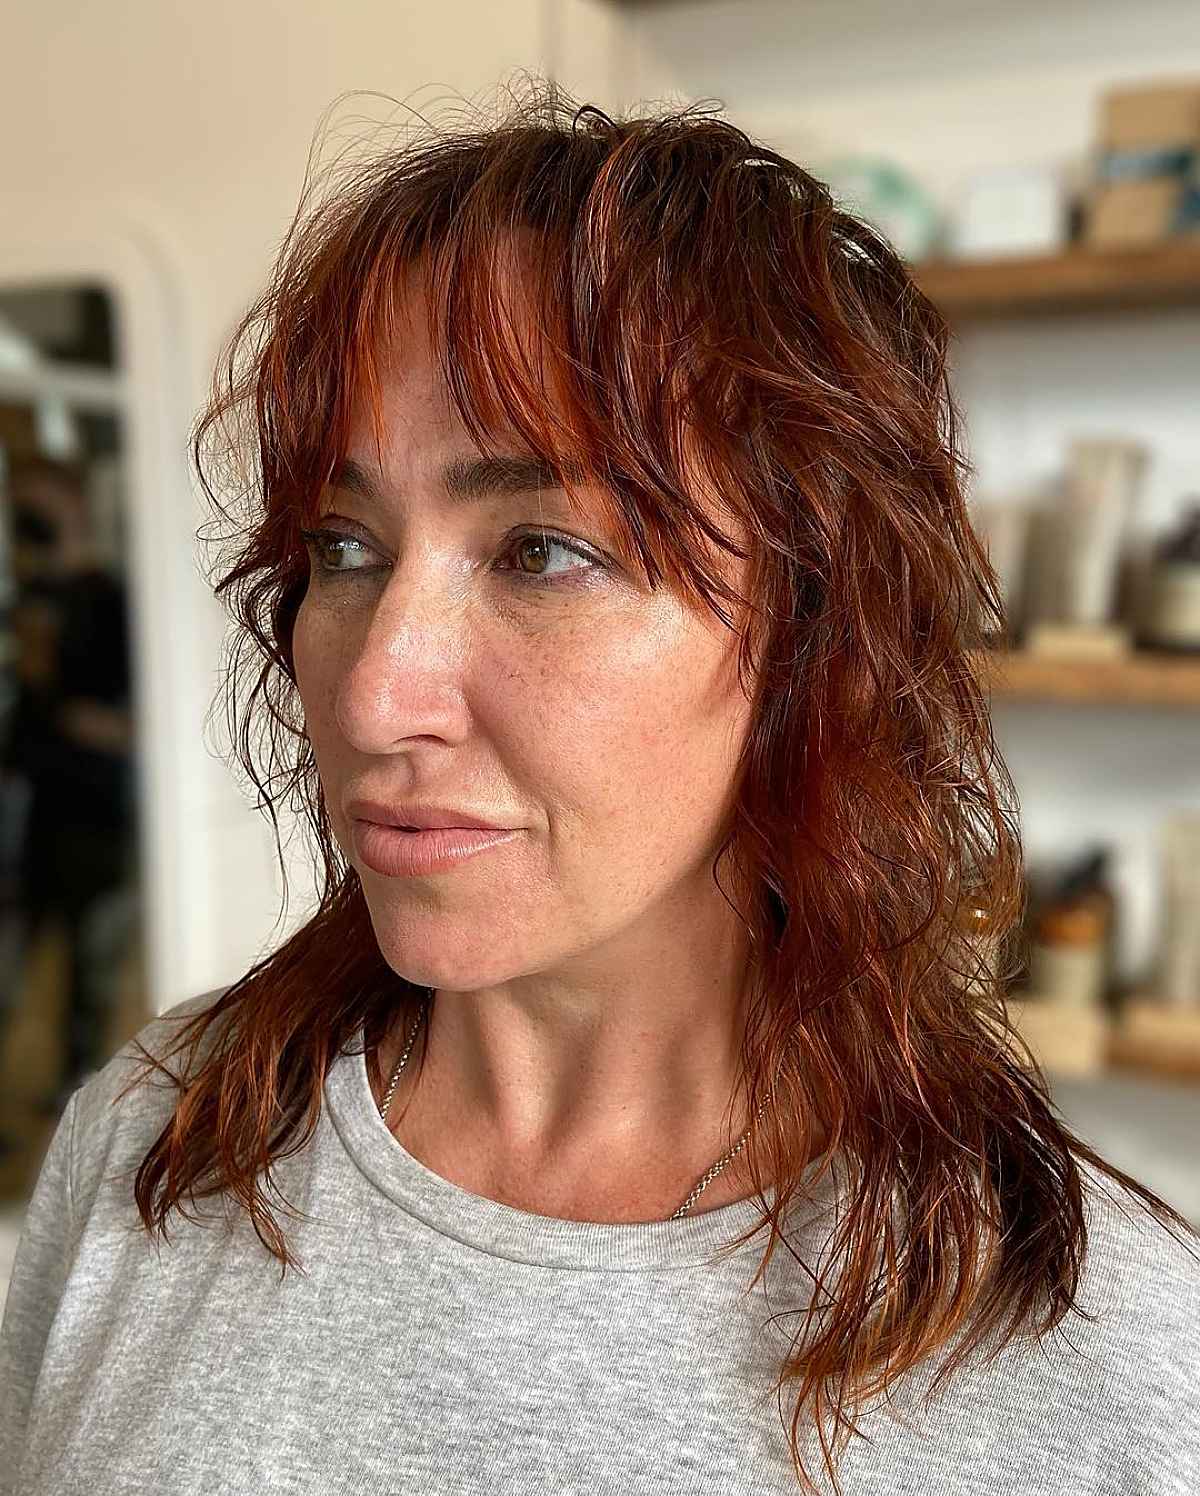 Shaggy Hair for Women Over 40